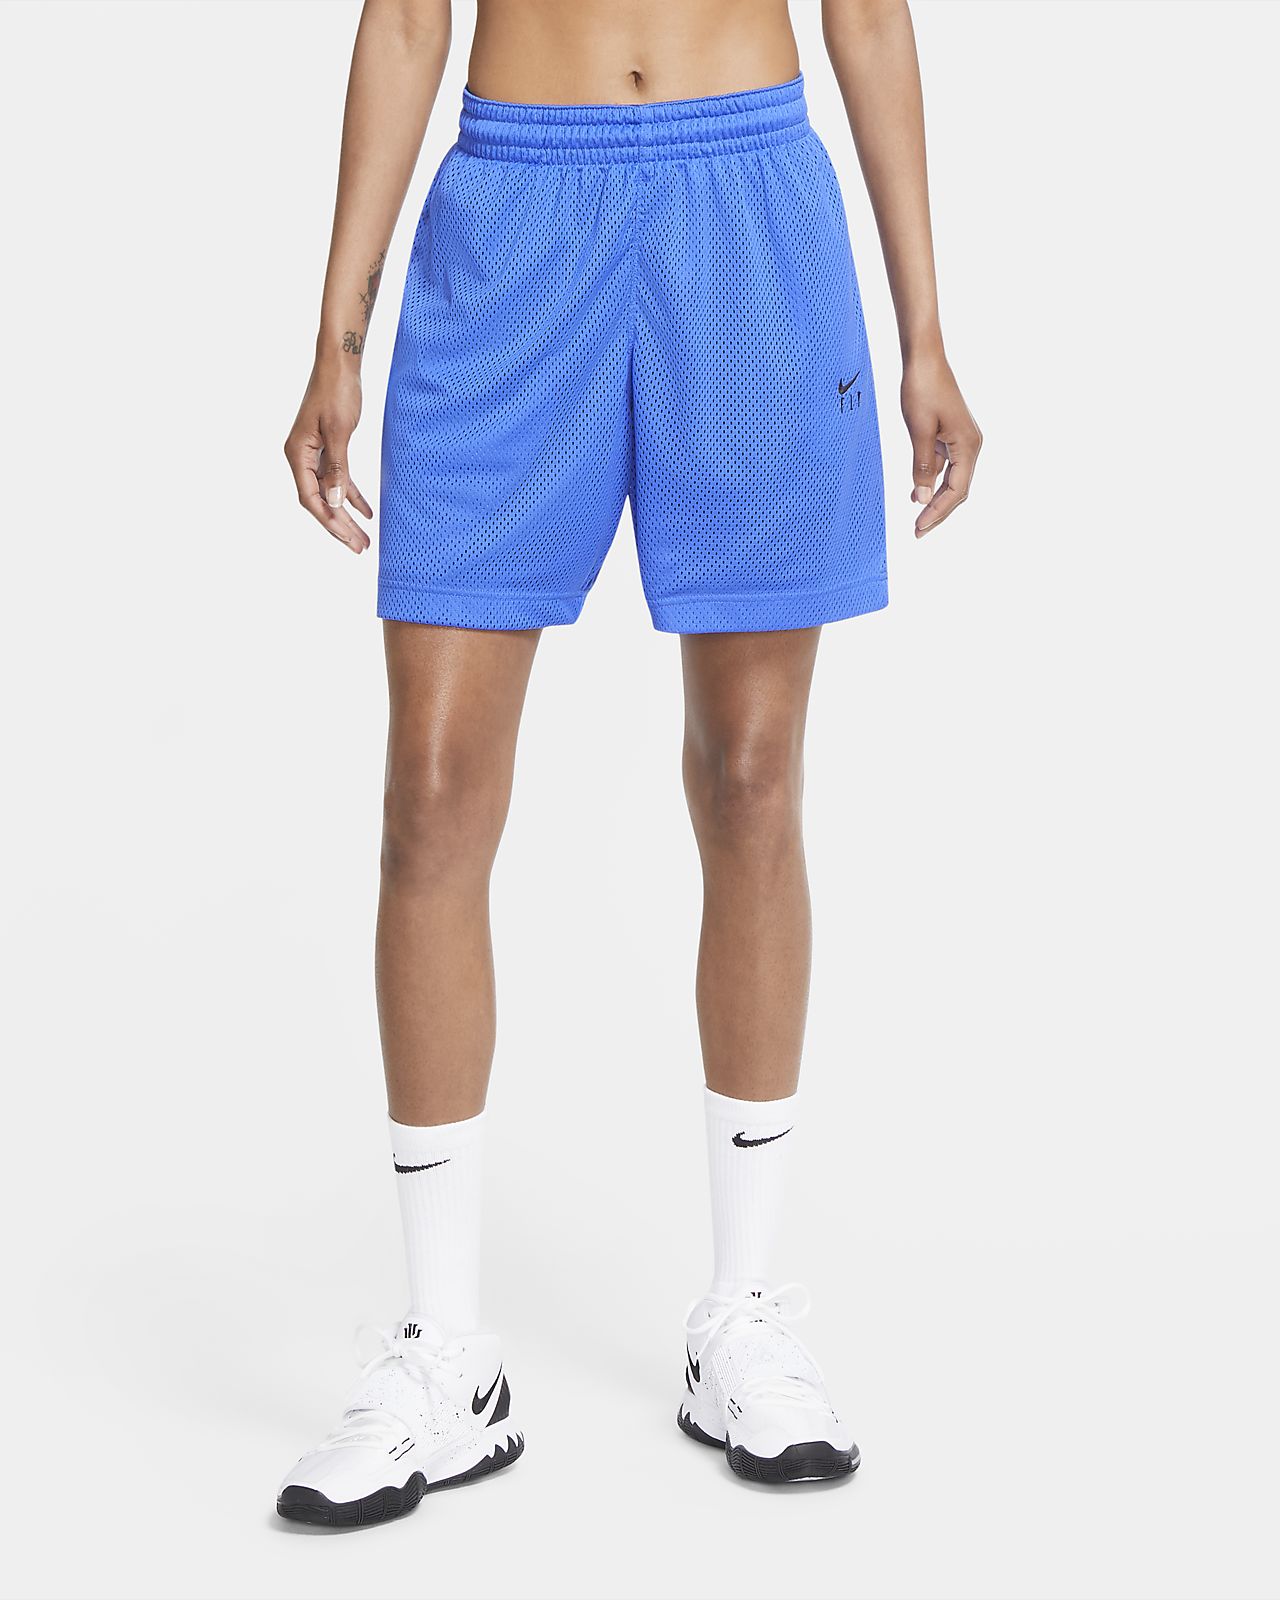 nike womens basketball shorts